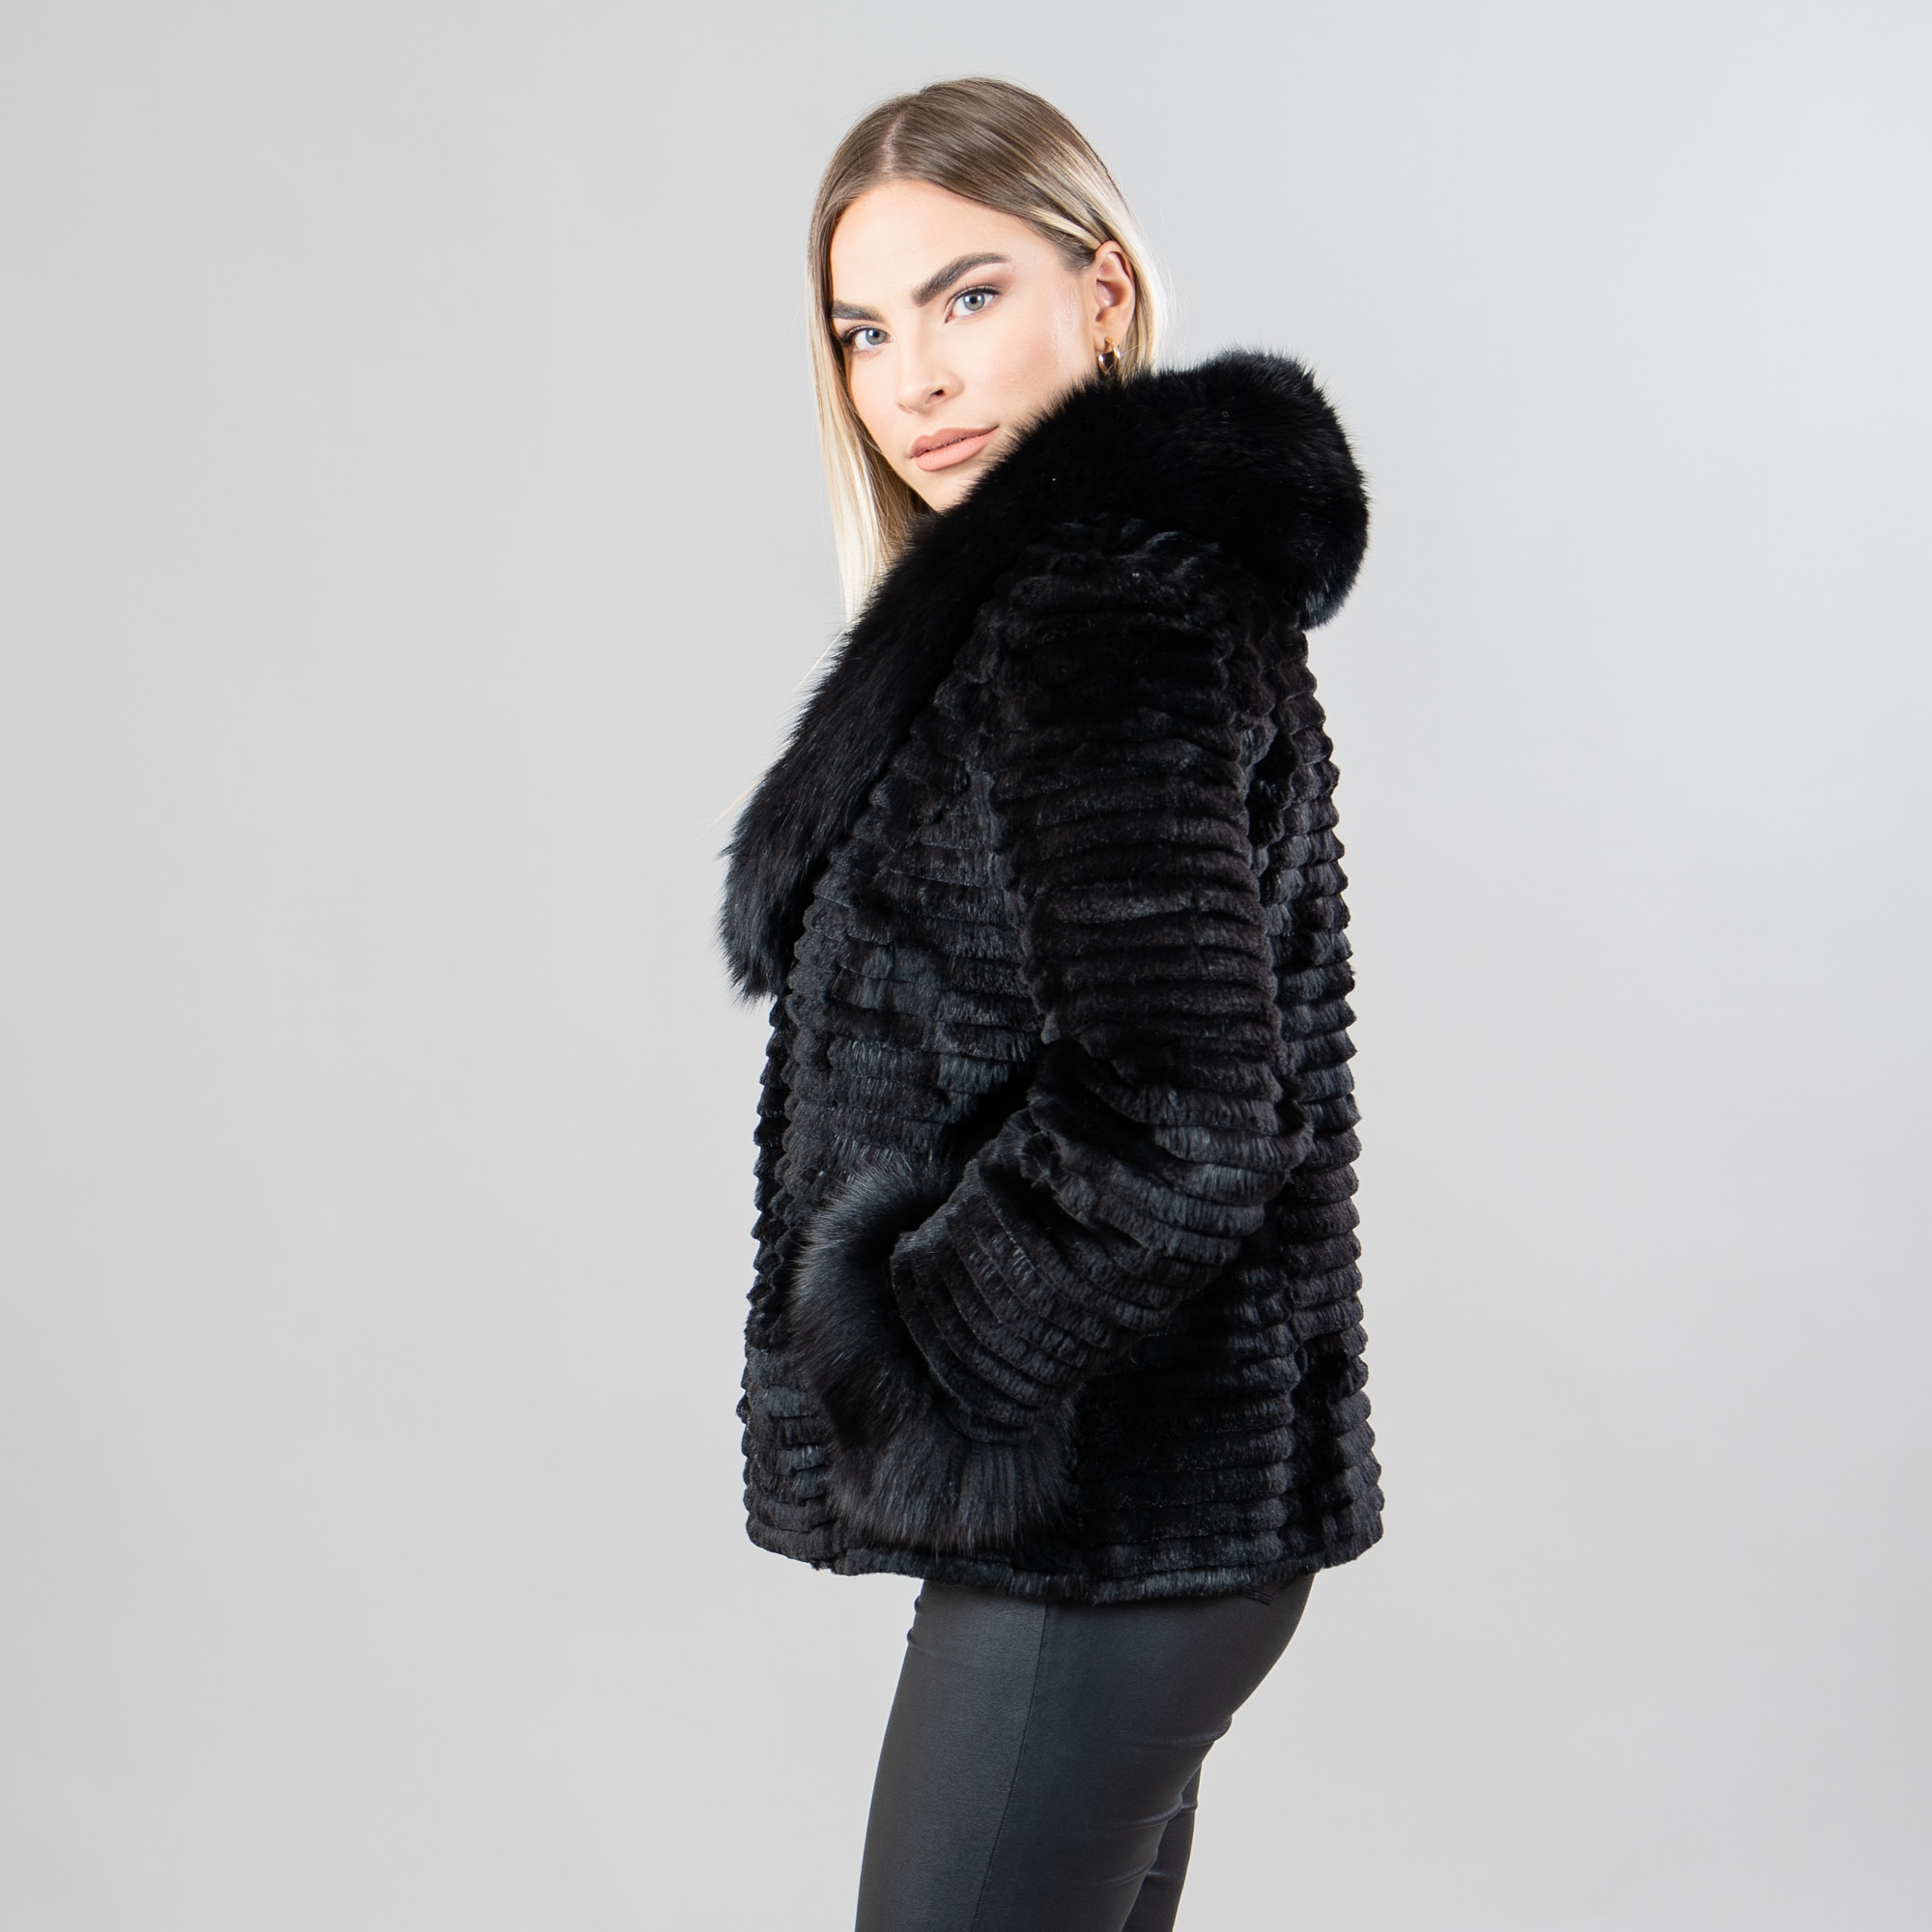 Rabbit fur  jacket with fox fur details in black color